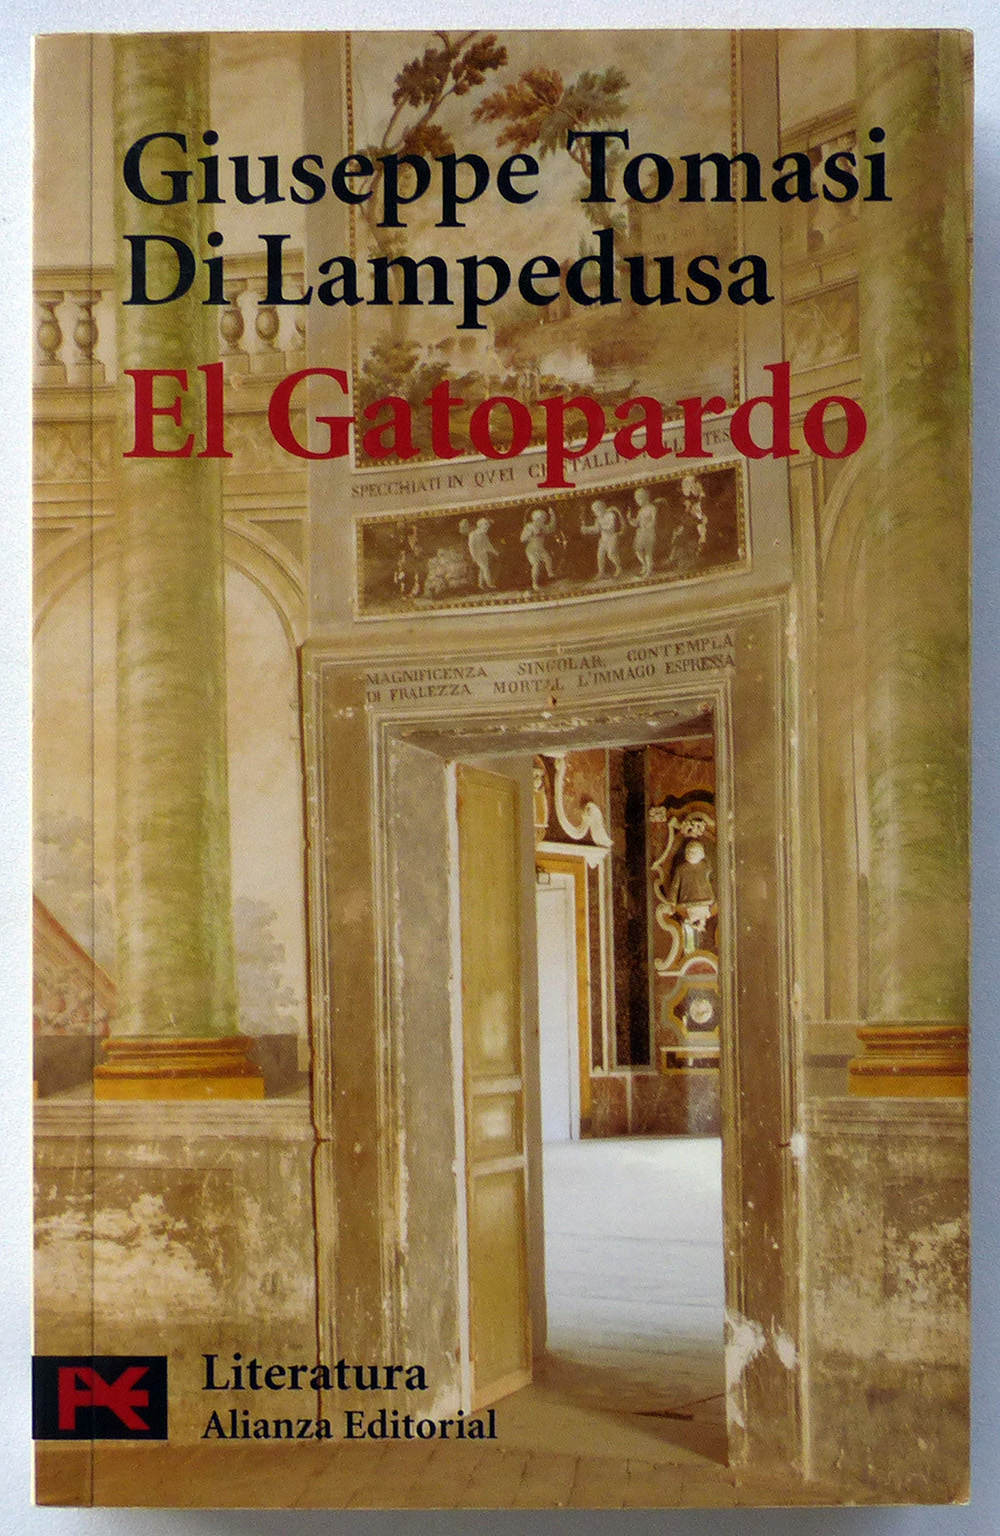 El Gatopardo - LAMPEDUSA, Giuseppe Tomasi di